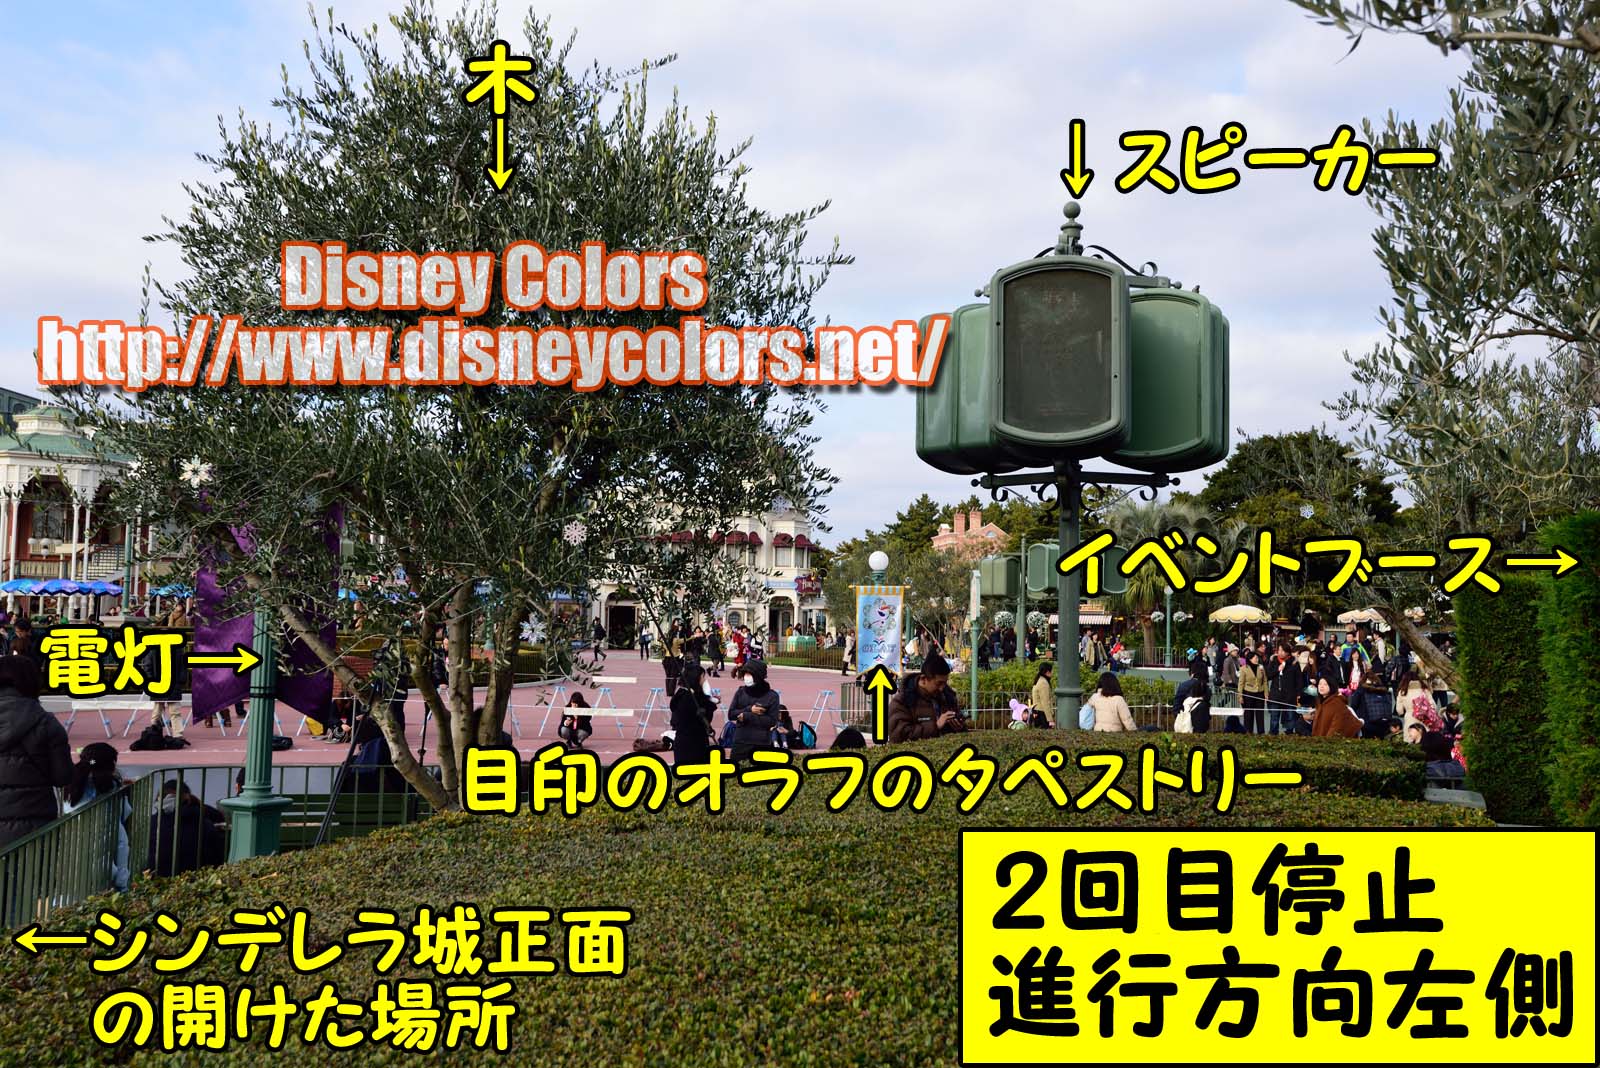 Tdl フローズンファンタジーパレード16 フロート停止位置 鑑賞ガイド Disney Colors Event Guide